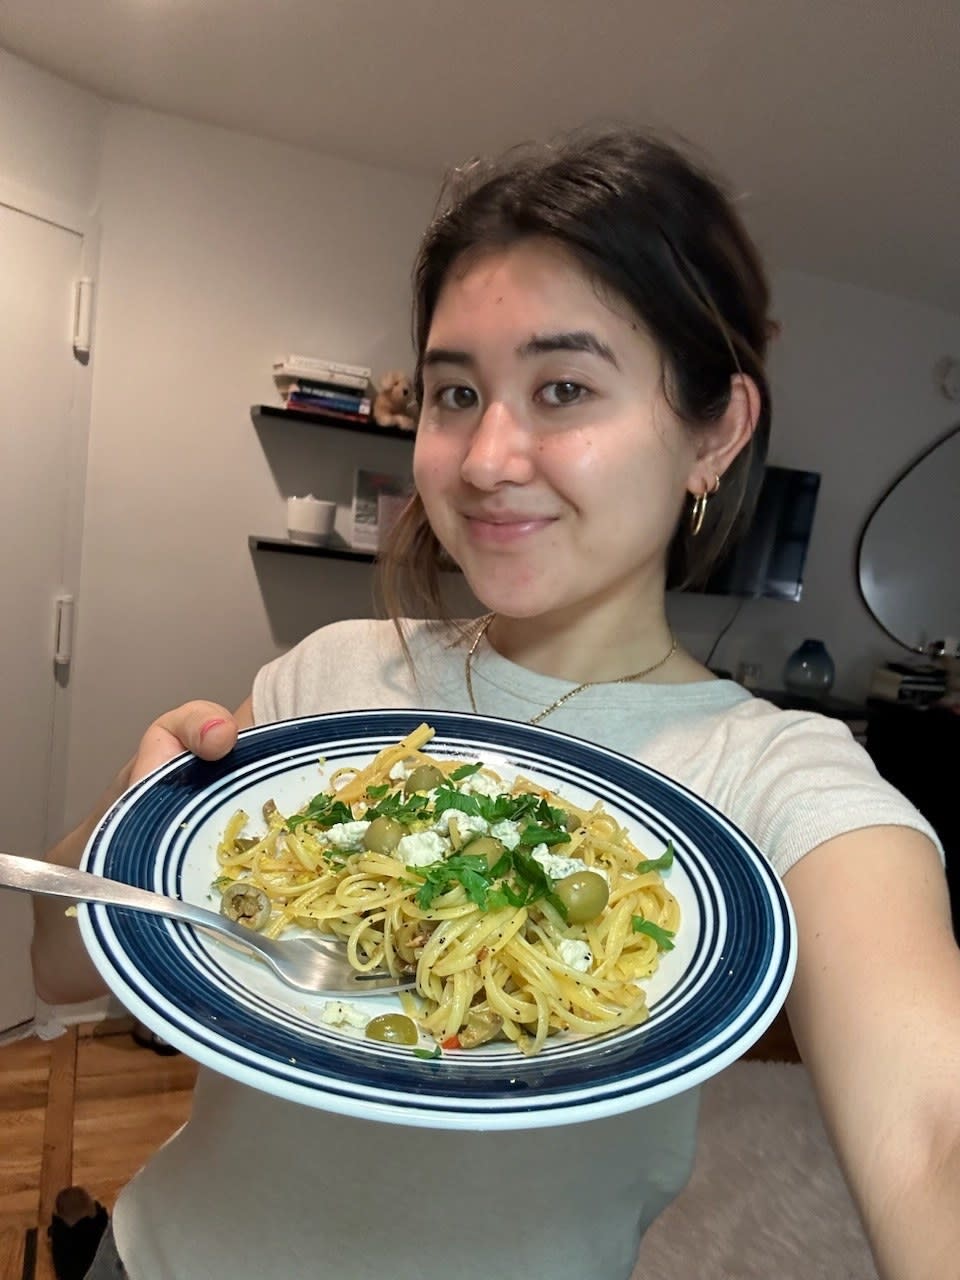 The writer holding her pasta dish